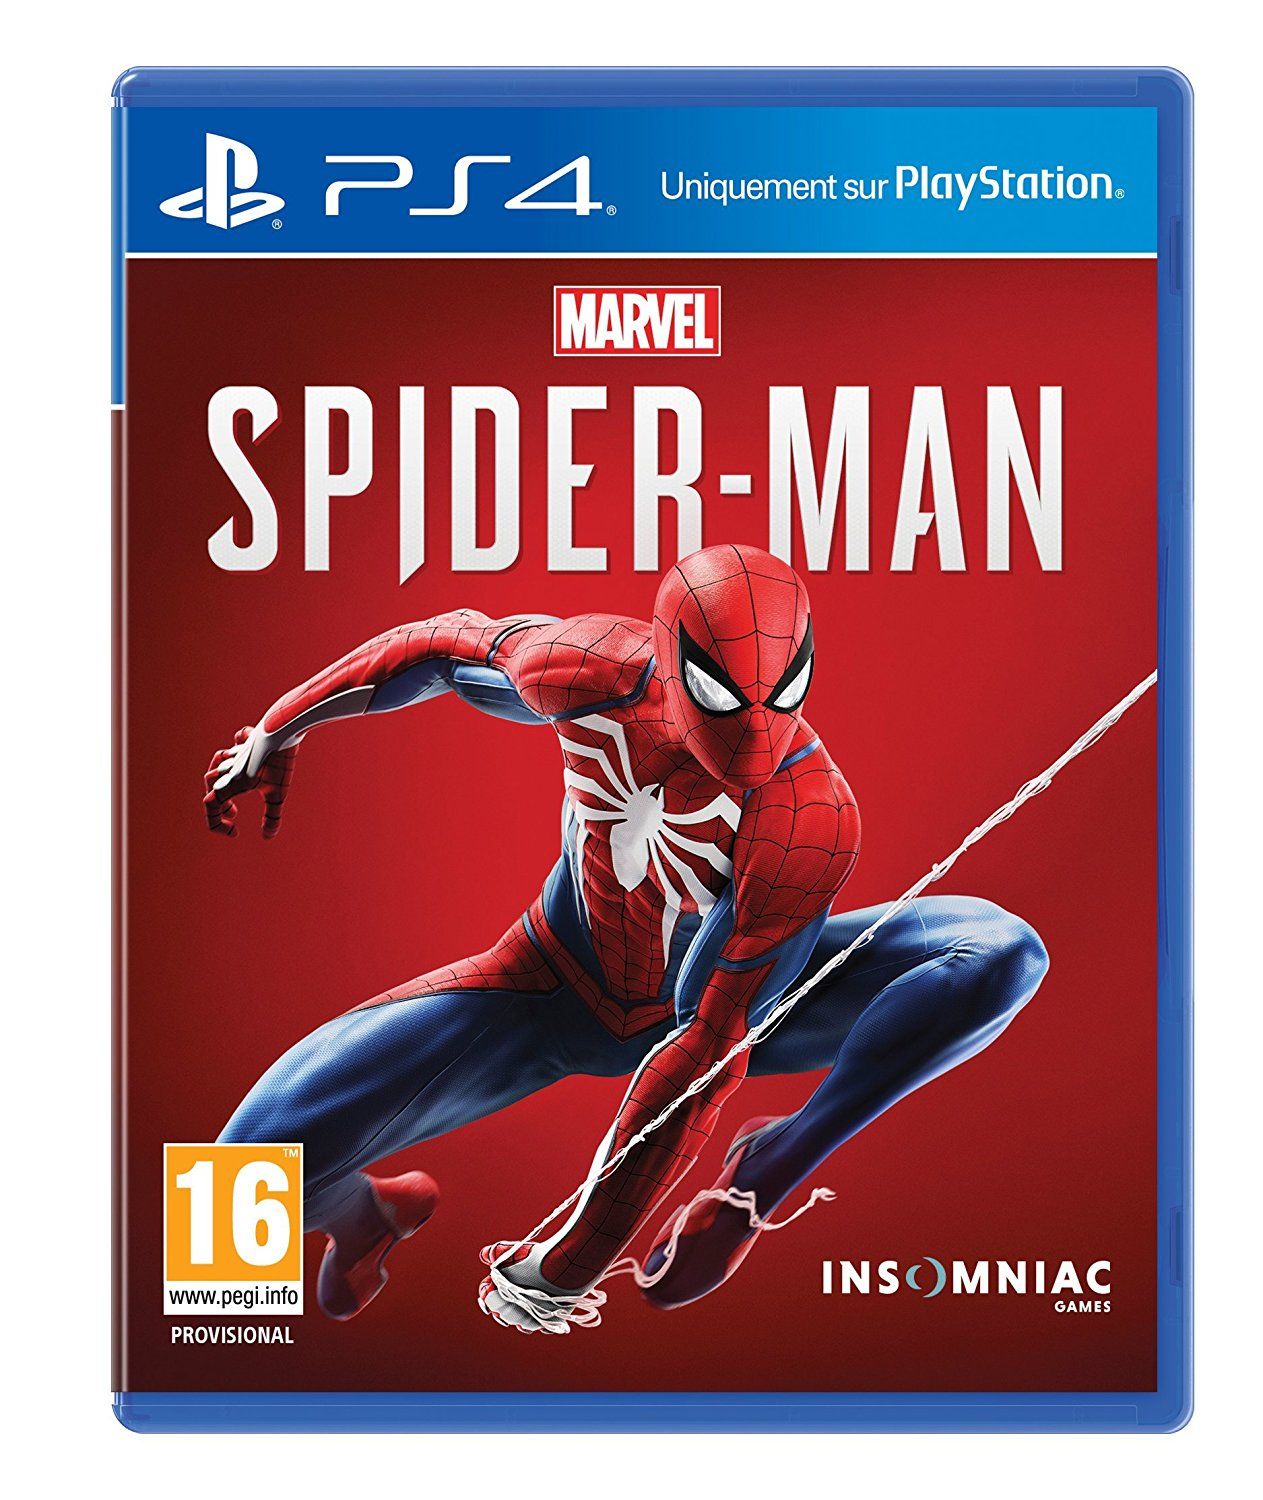 Acheter Marvels Spider-Man - Playstation 4 prix promo neuf et